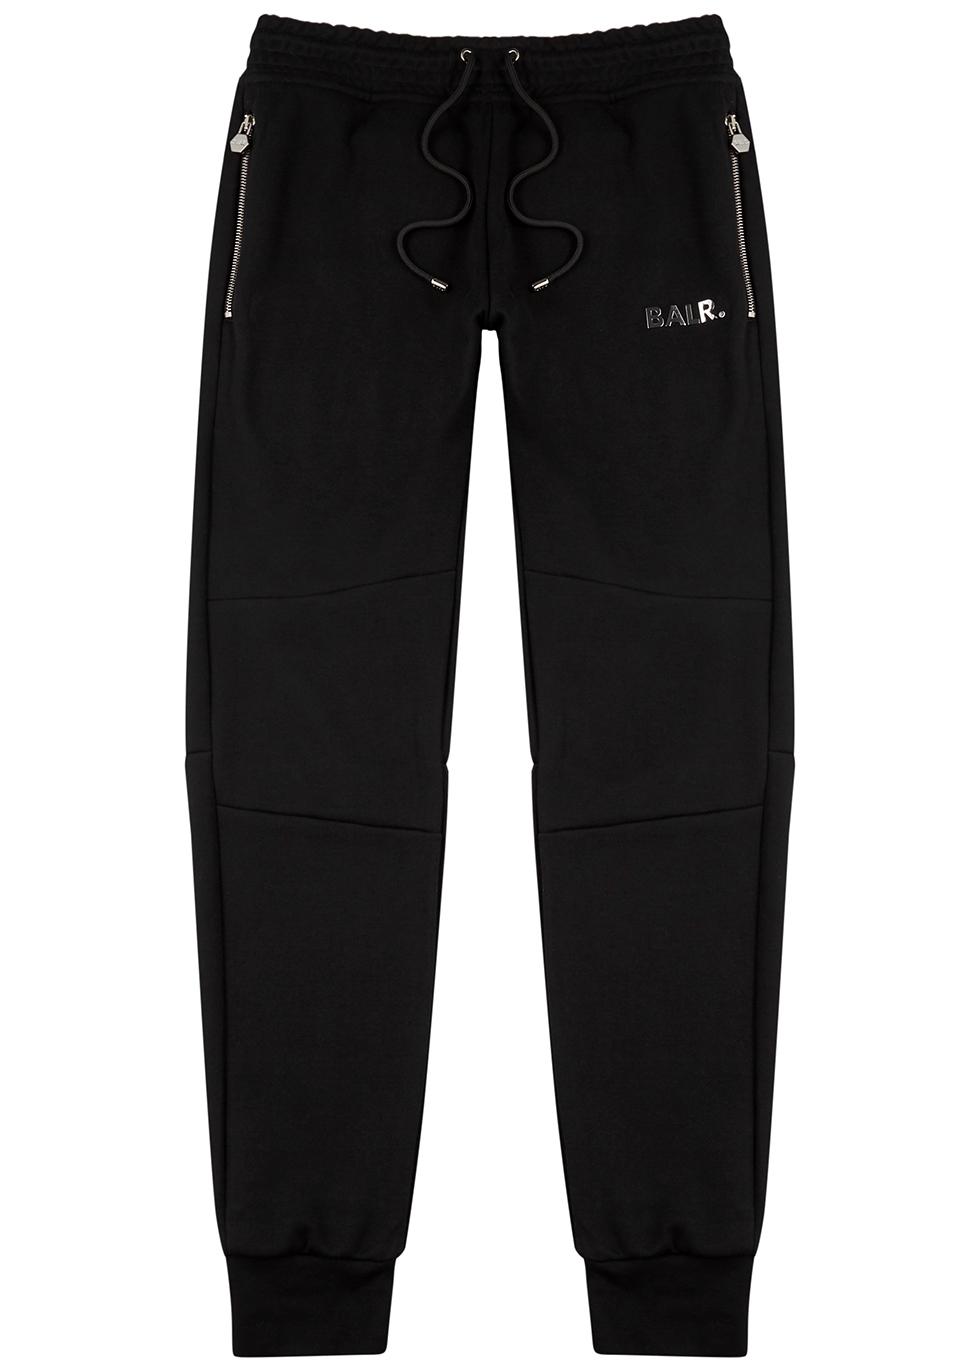 Q-Series black logo cotton-blend sweatpants by BALR.